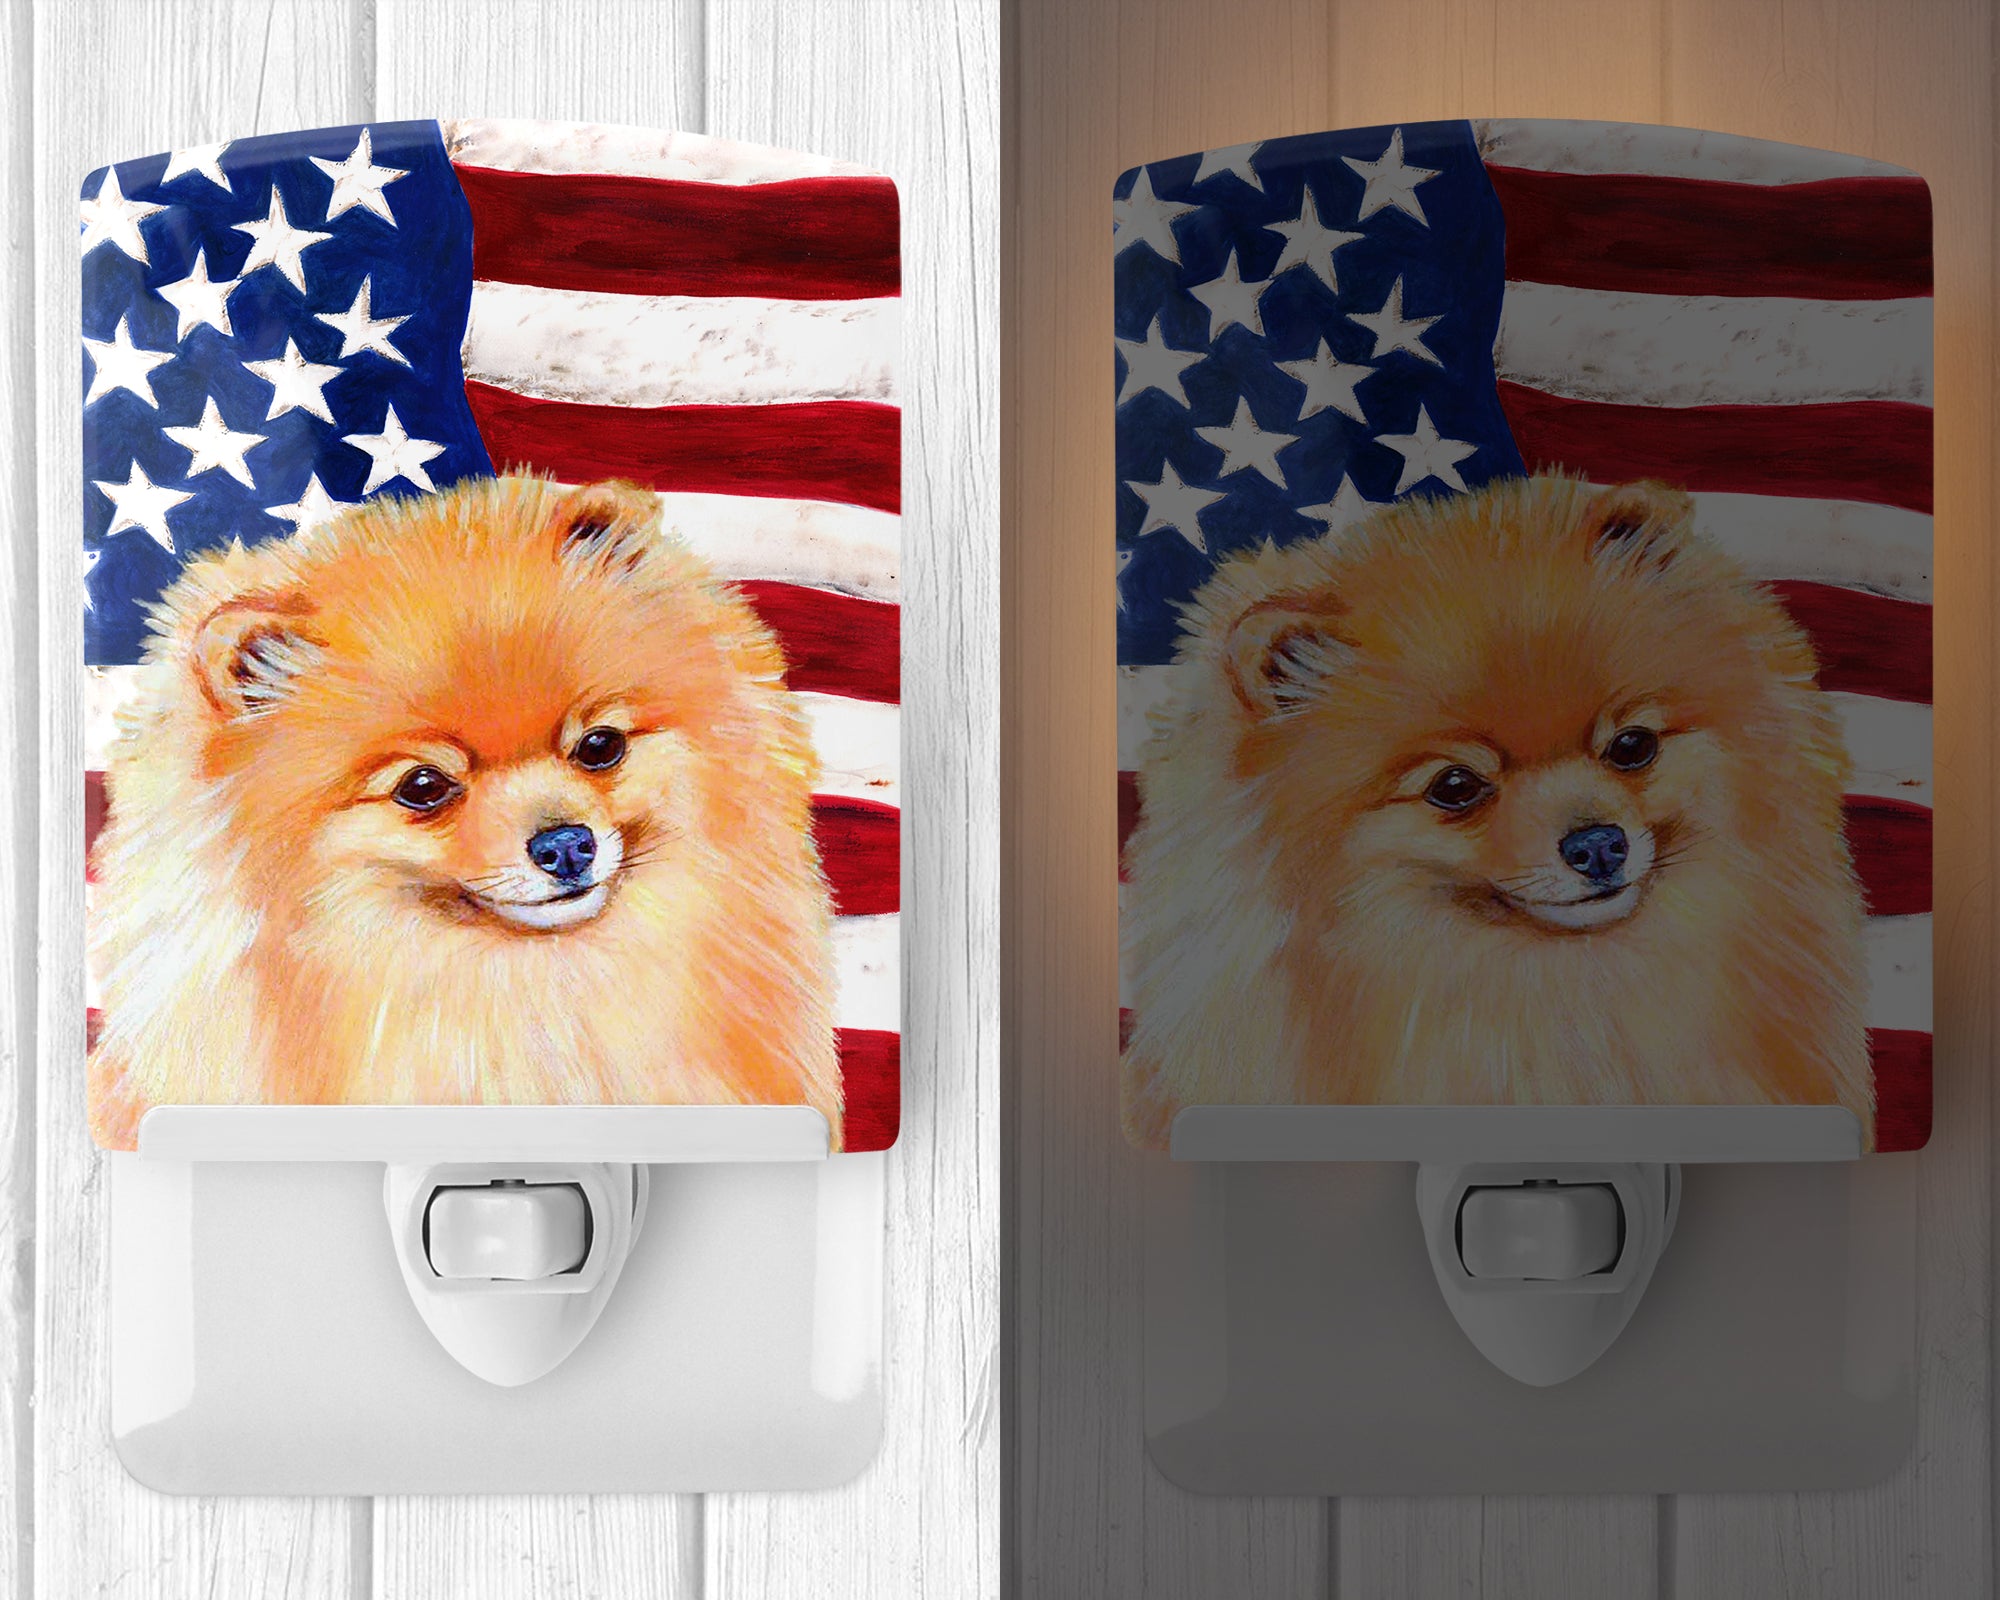 USA American Flag with Pomeranian Ceramic Night Light LH9034CNL - the-store.com